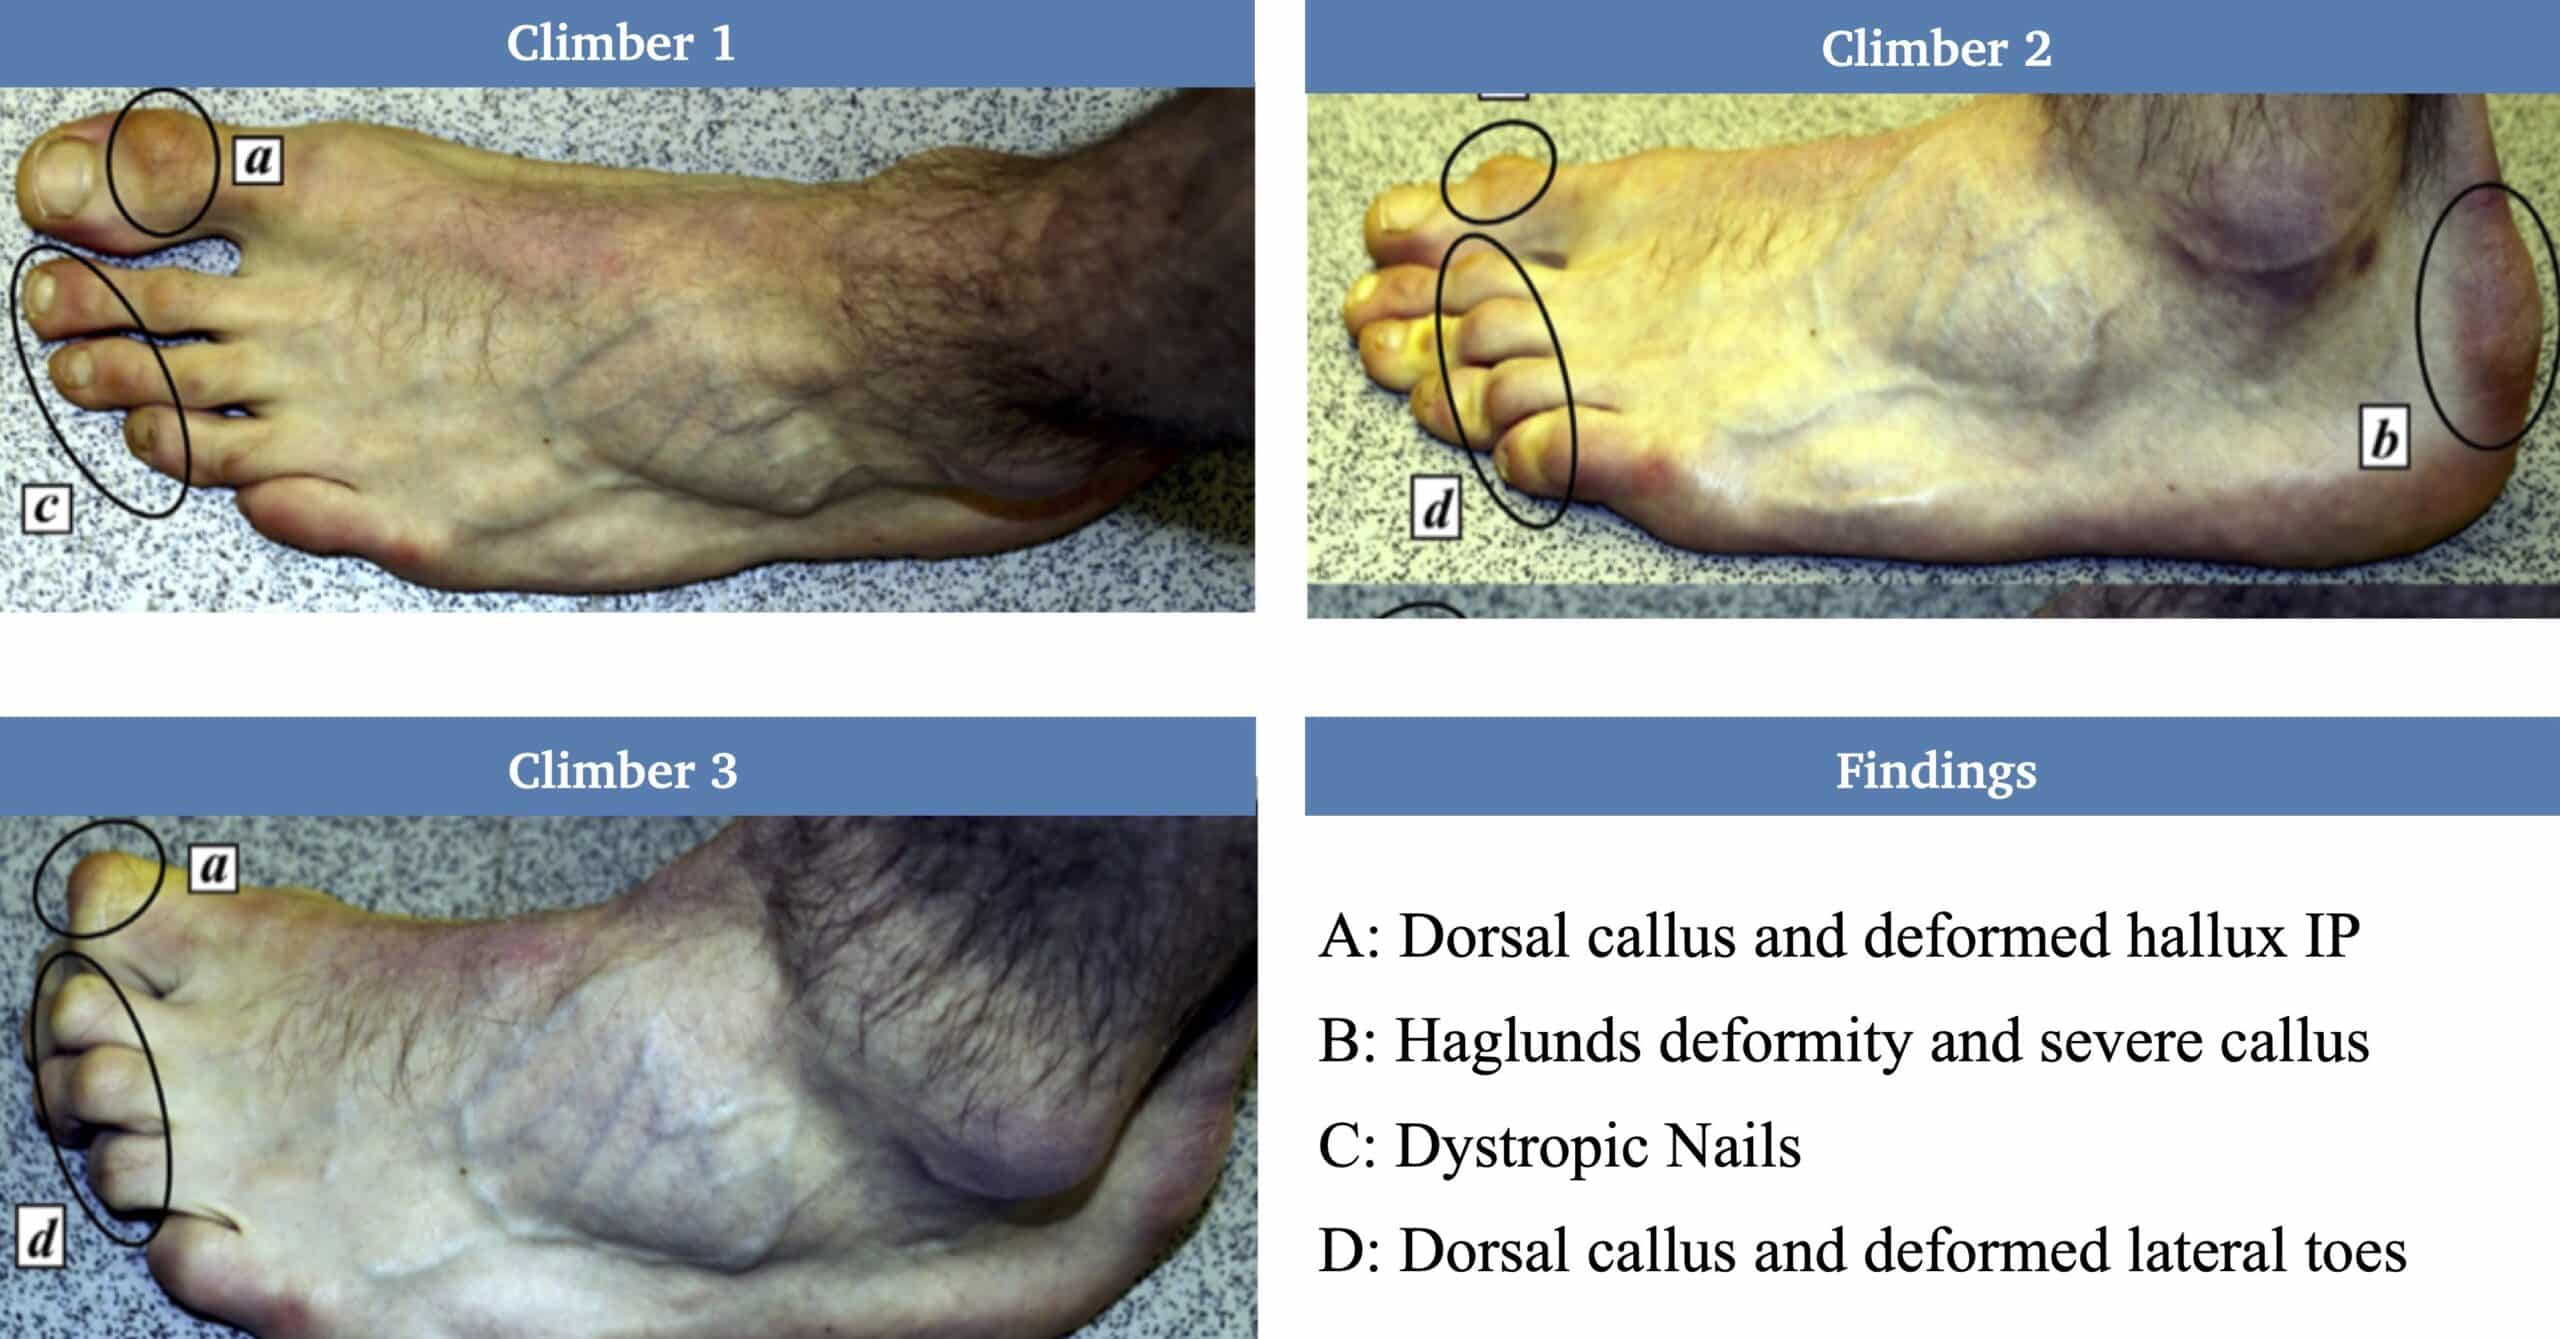 Example of an injury related to barefoot running: Hemorrhagic